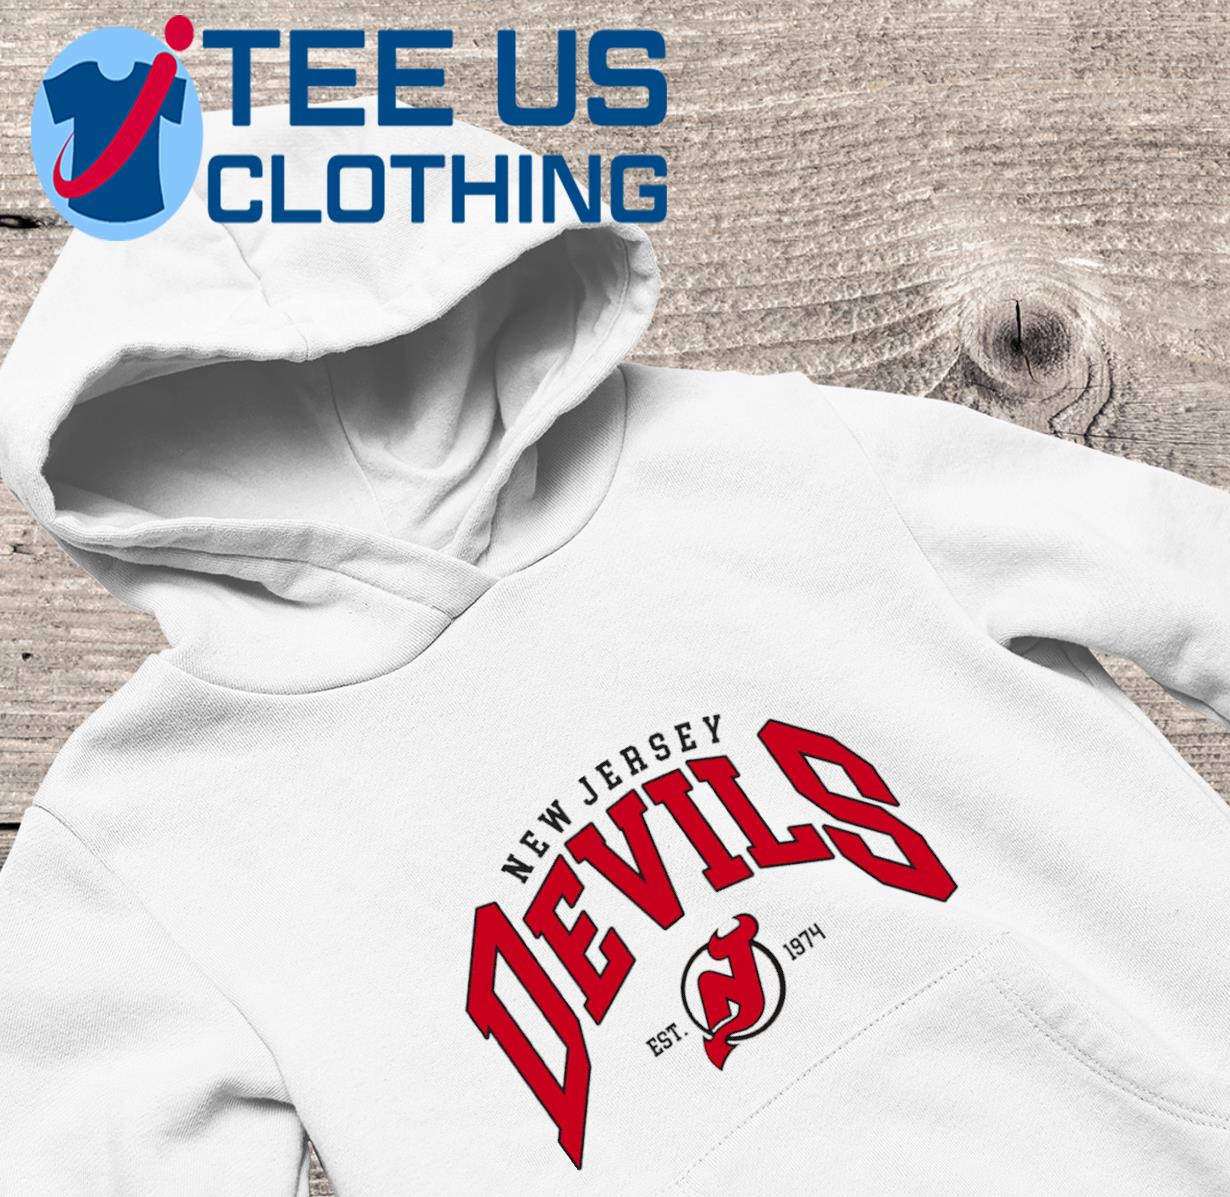 NJ Devils Est 1974 Sweatshirt